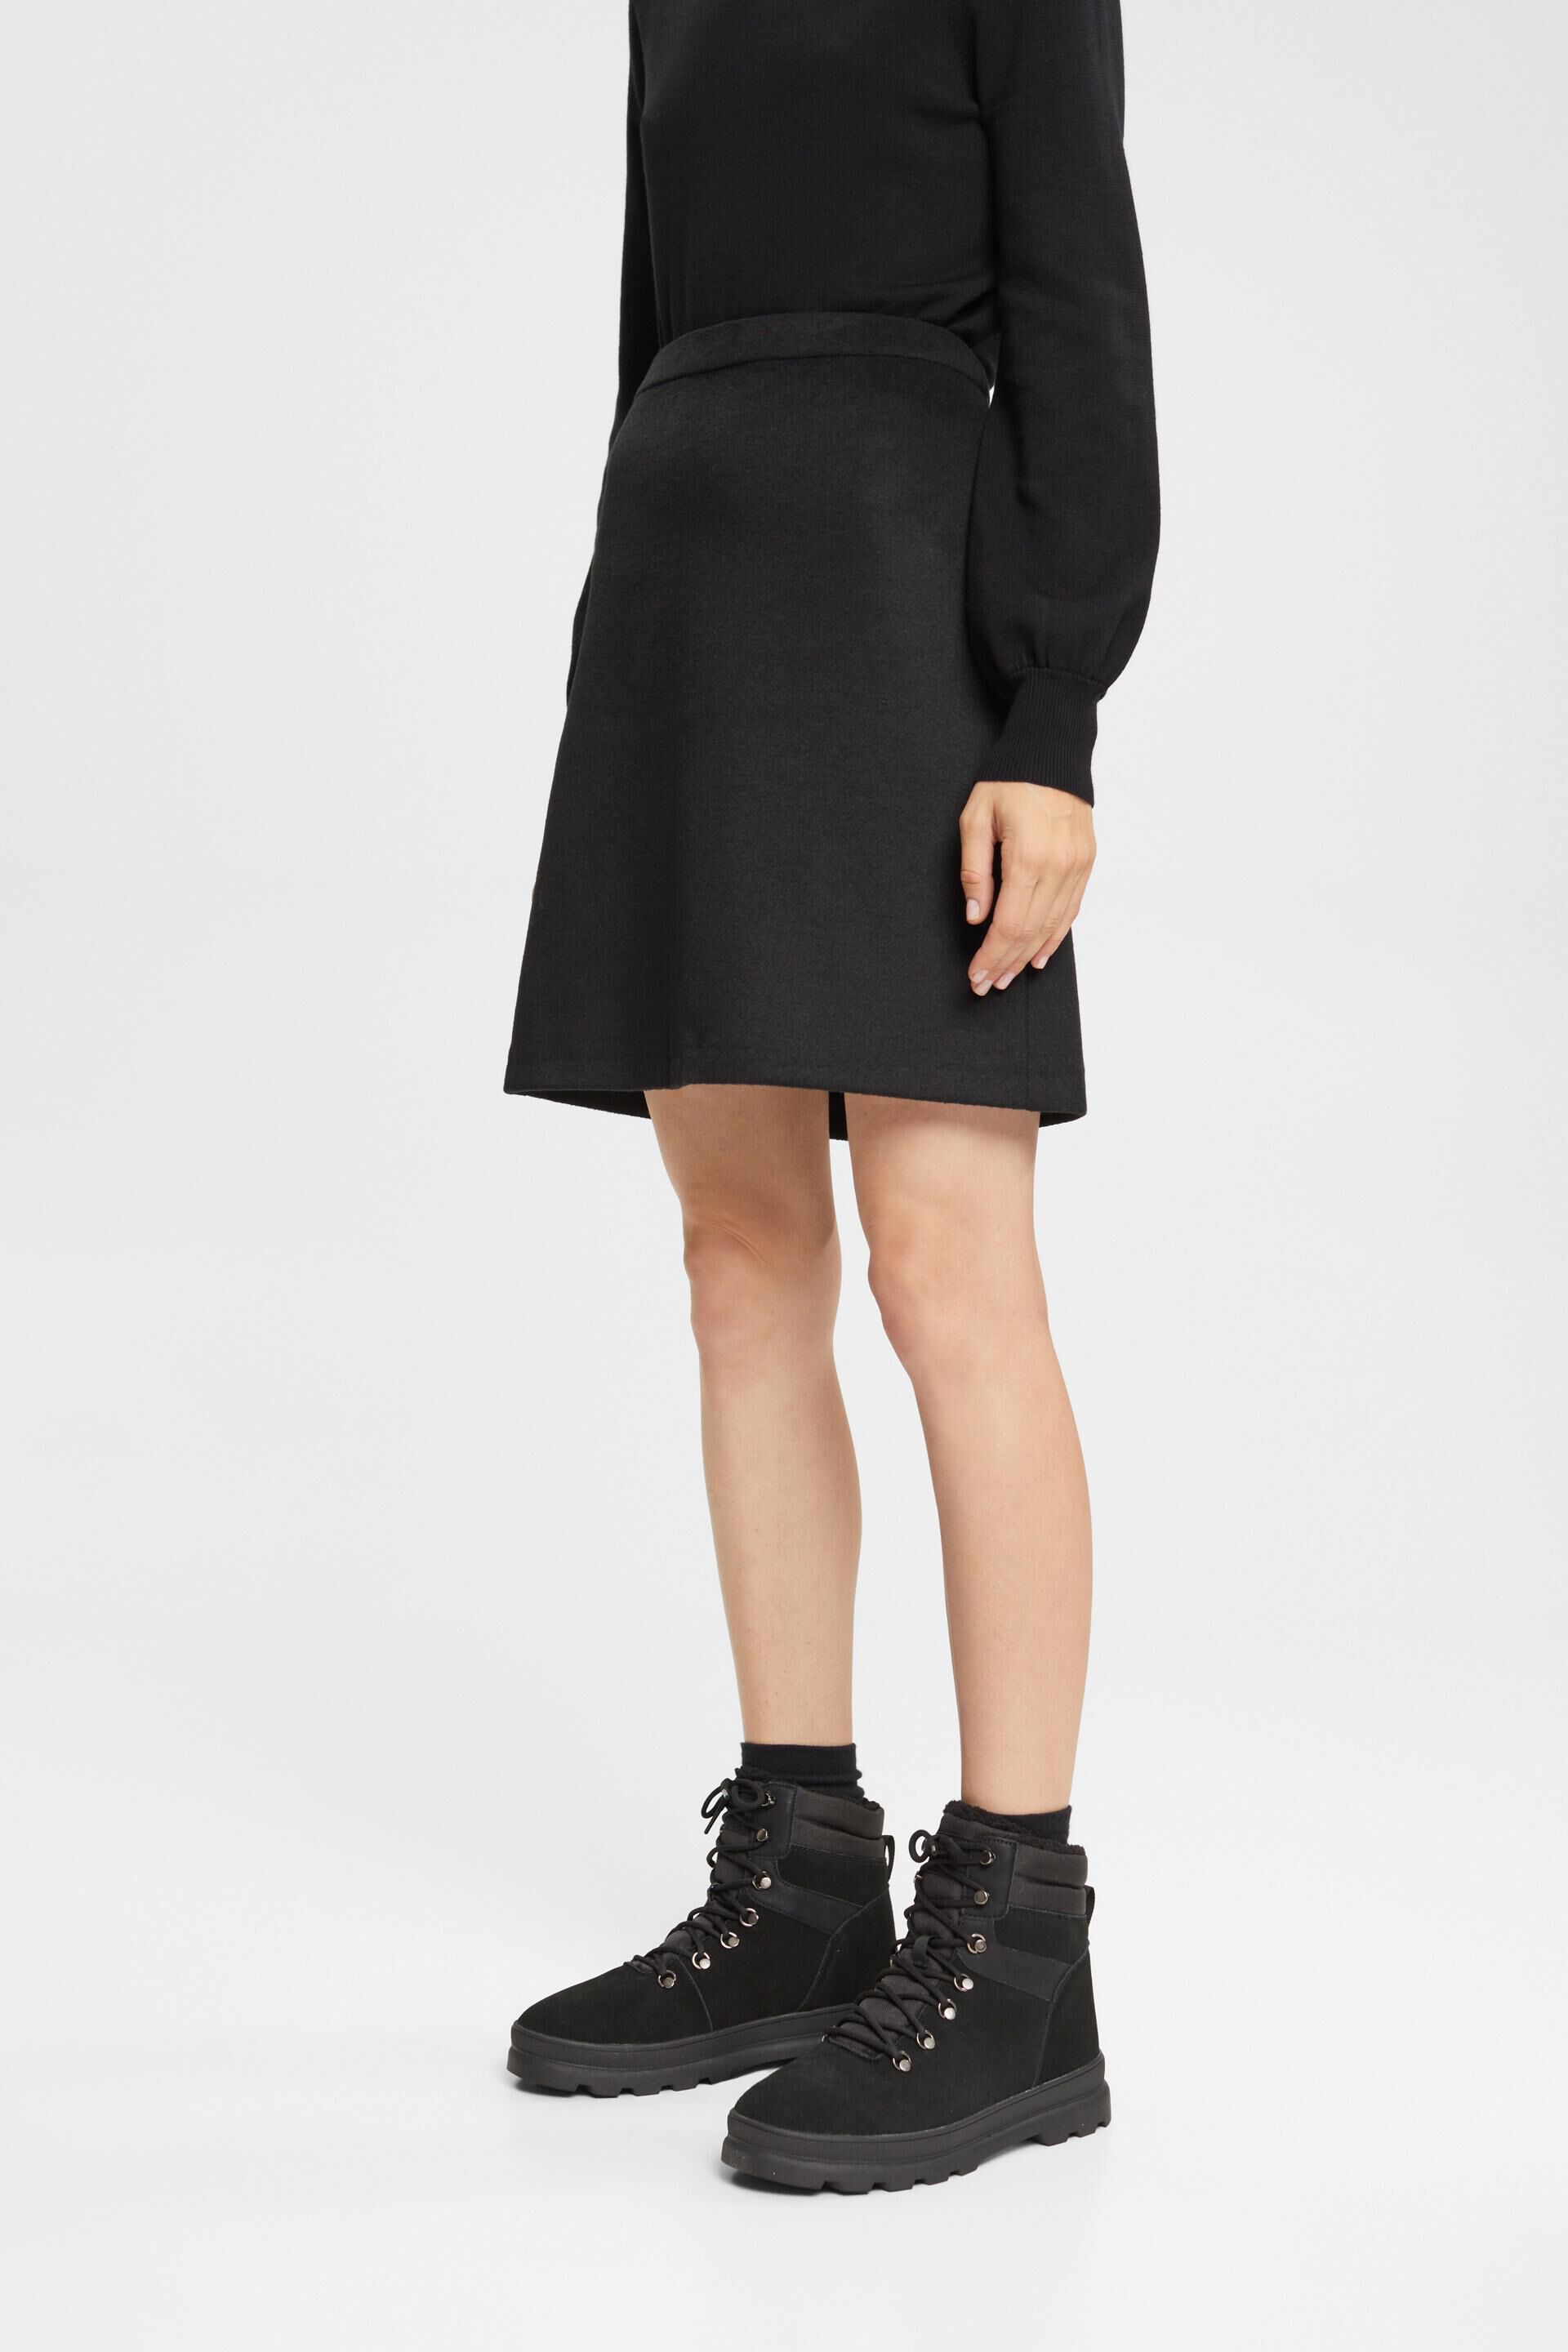 Esprit Wool blend skirt mini